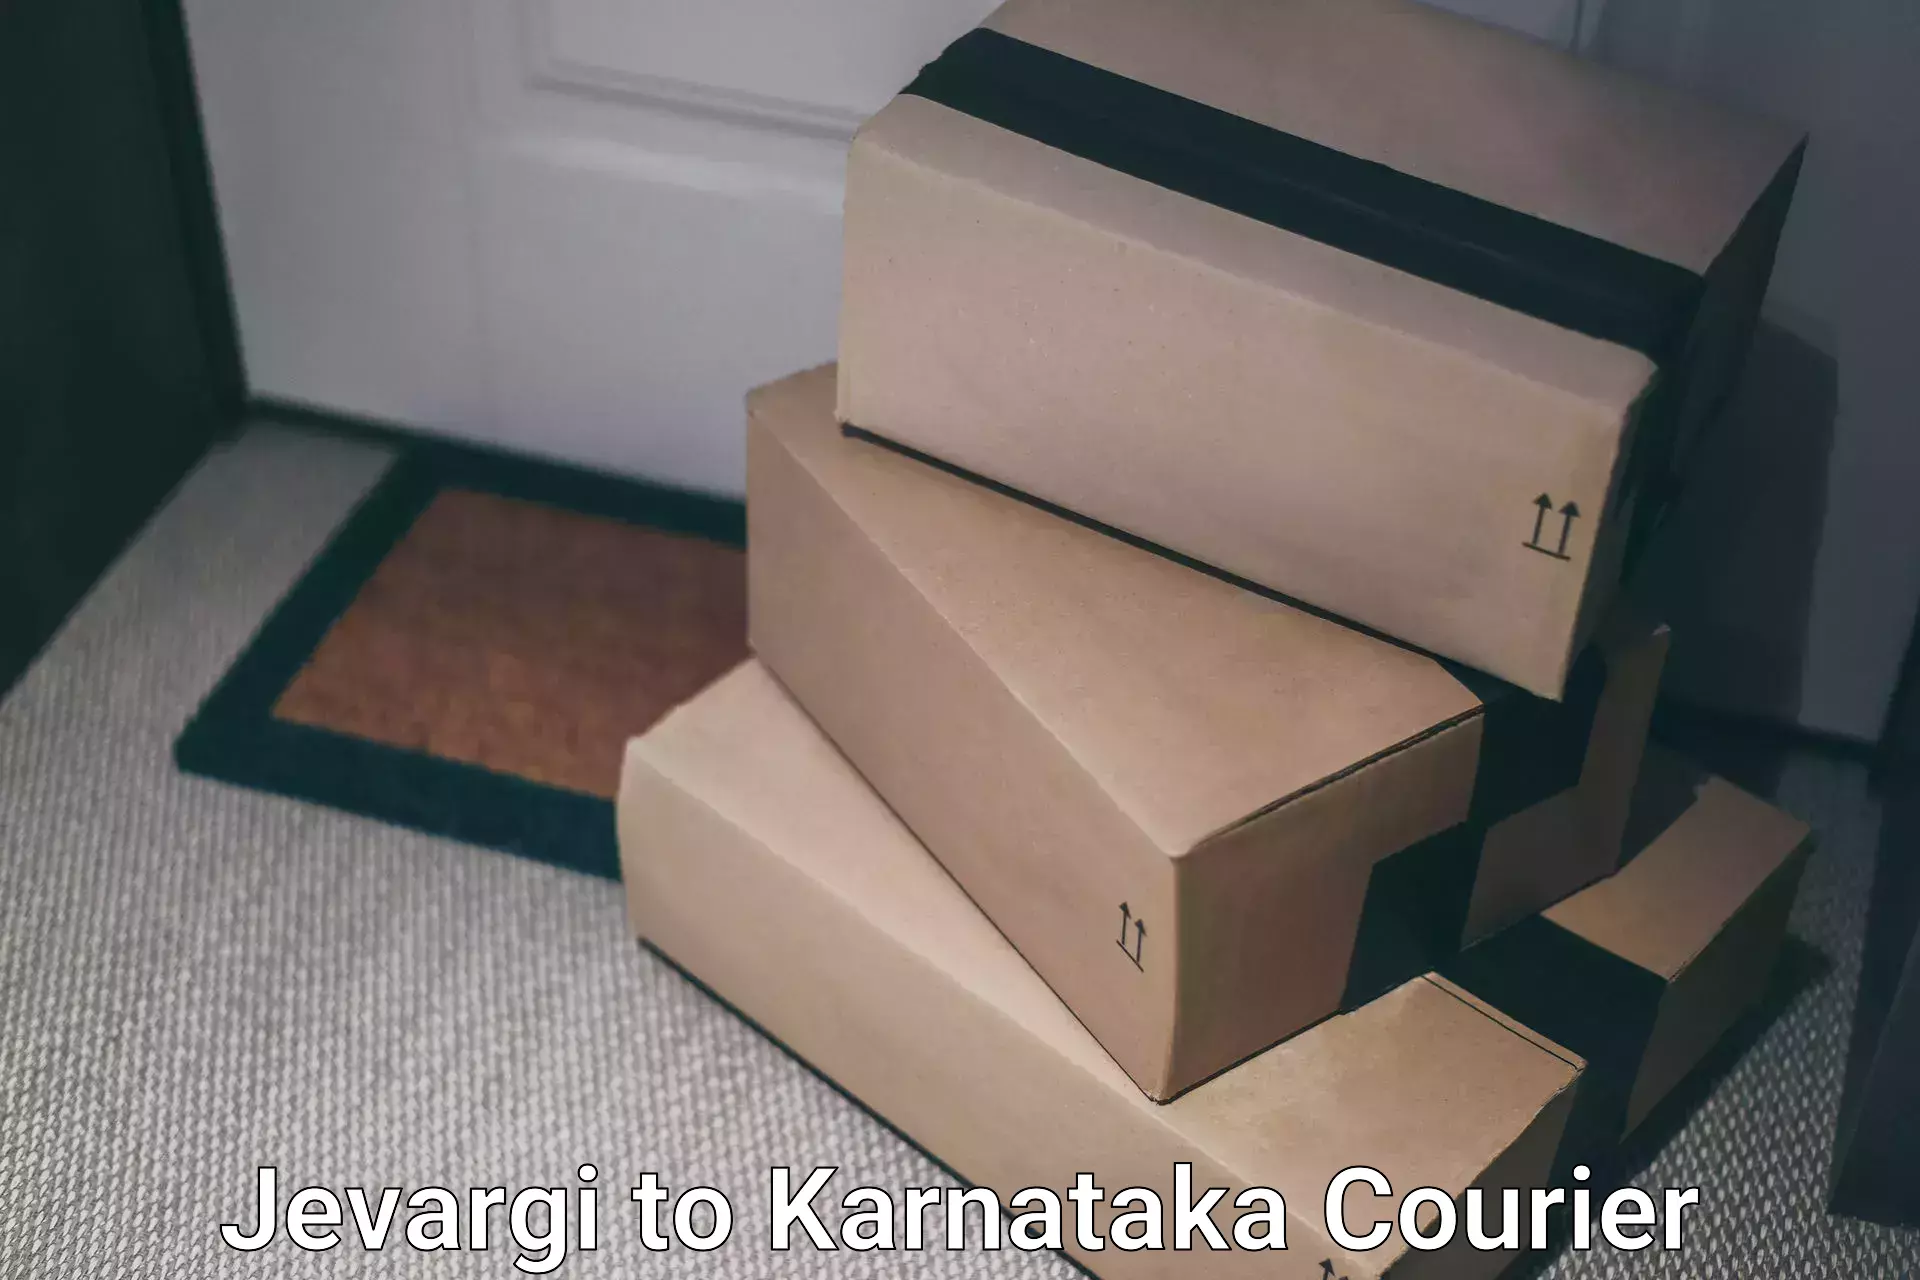 Reliable delivery network Jevargi to Mysore